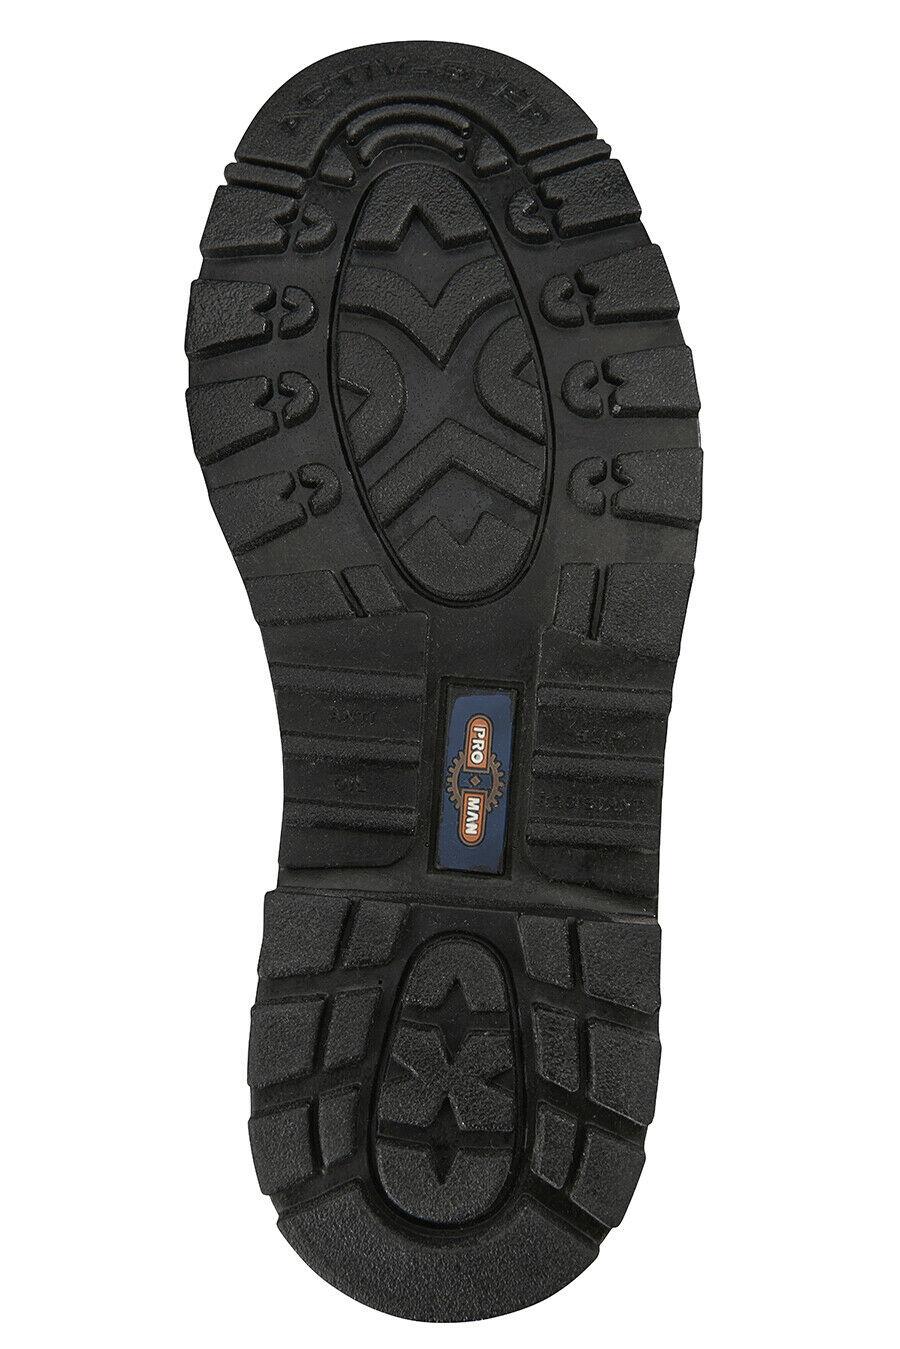 Rock Fall ProMan Jackson black lightweight steel toe/midsole S3 safety boot #PM4002